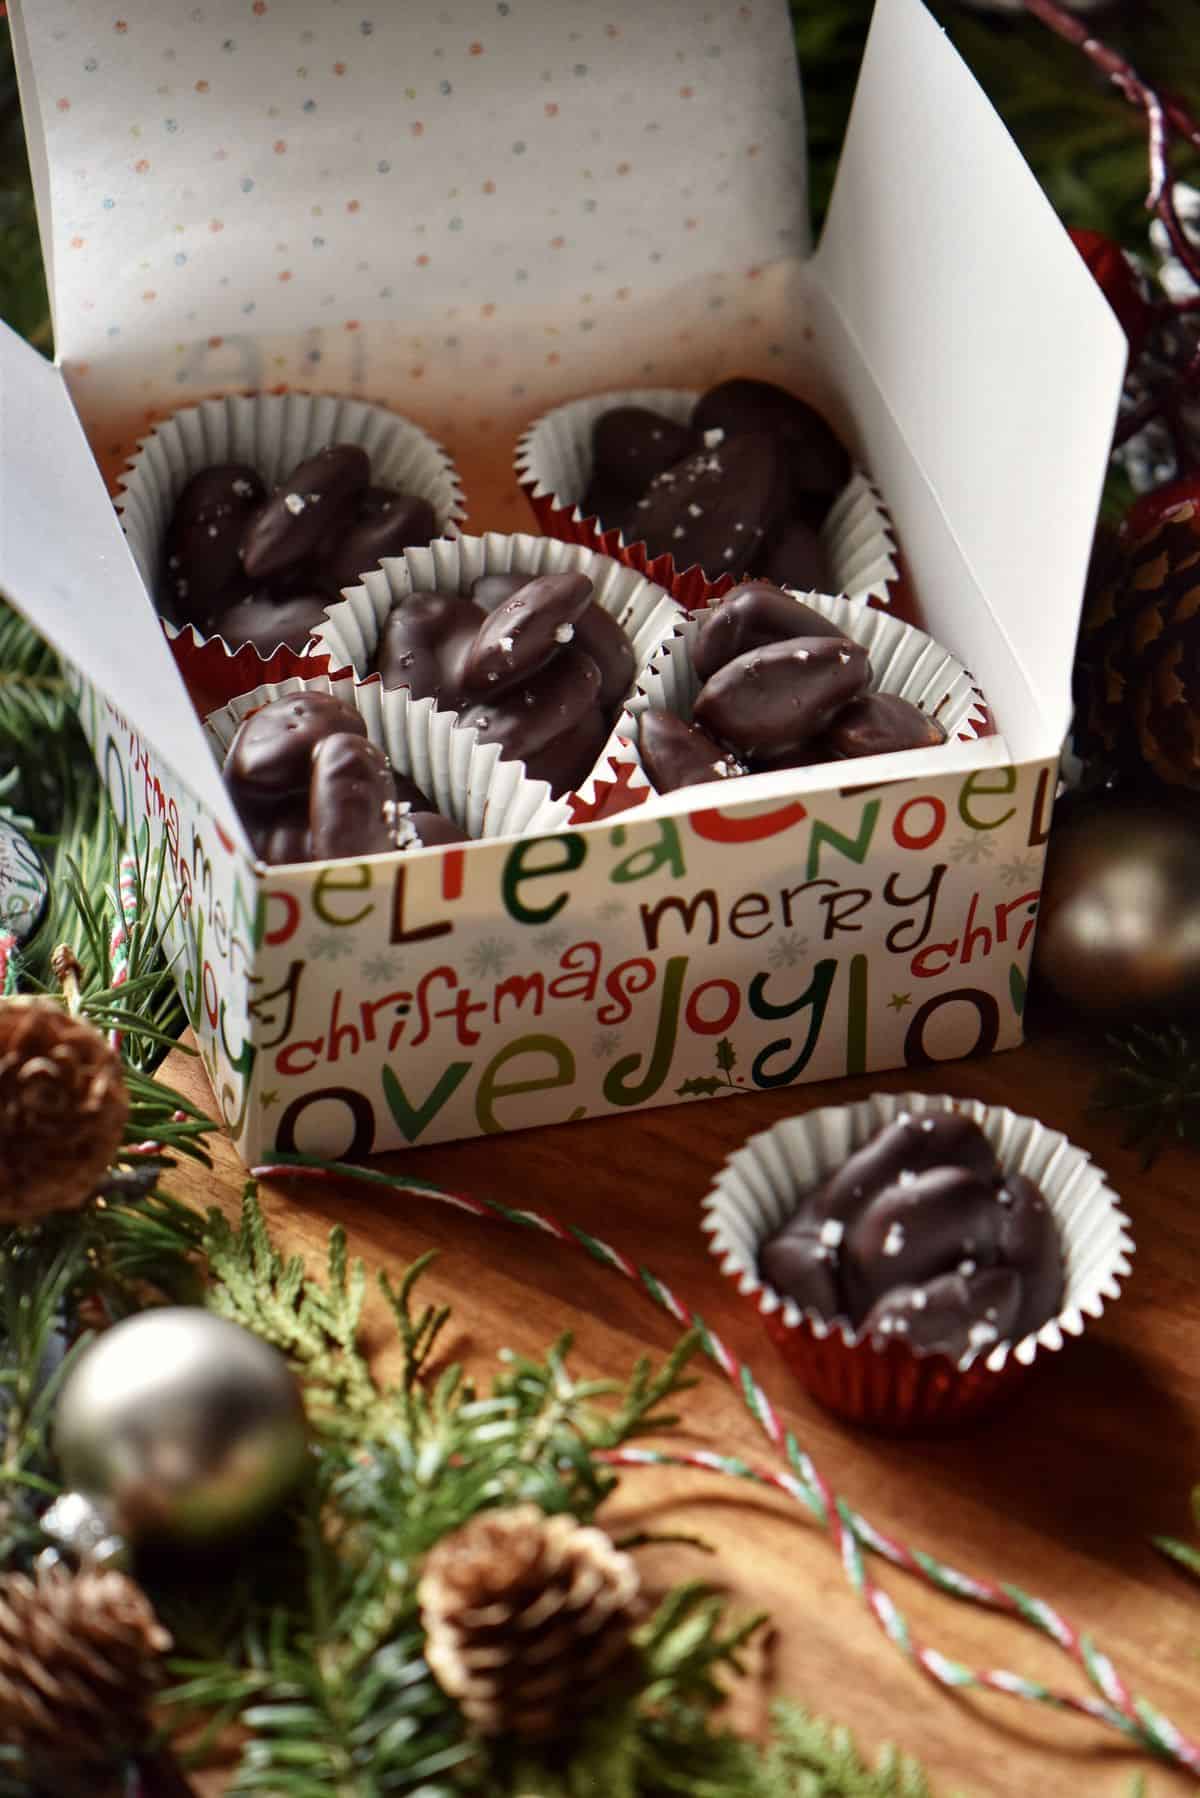 Chocolate covered almonds in a decorative box.